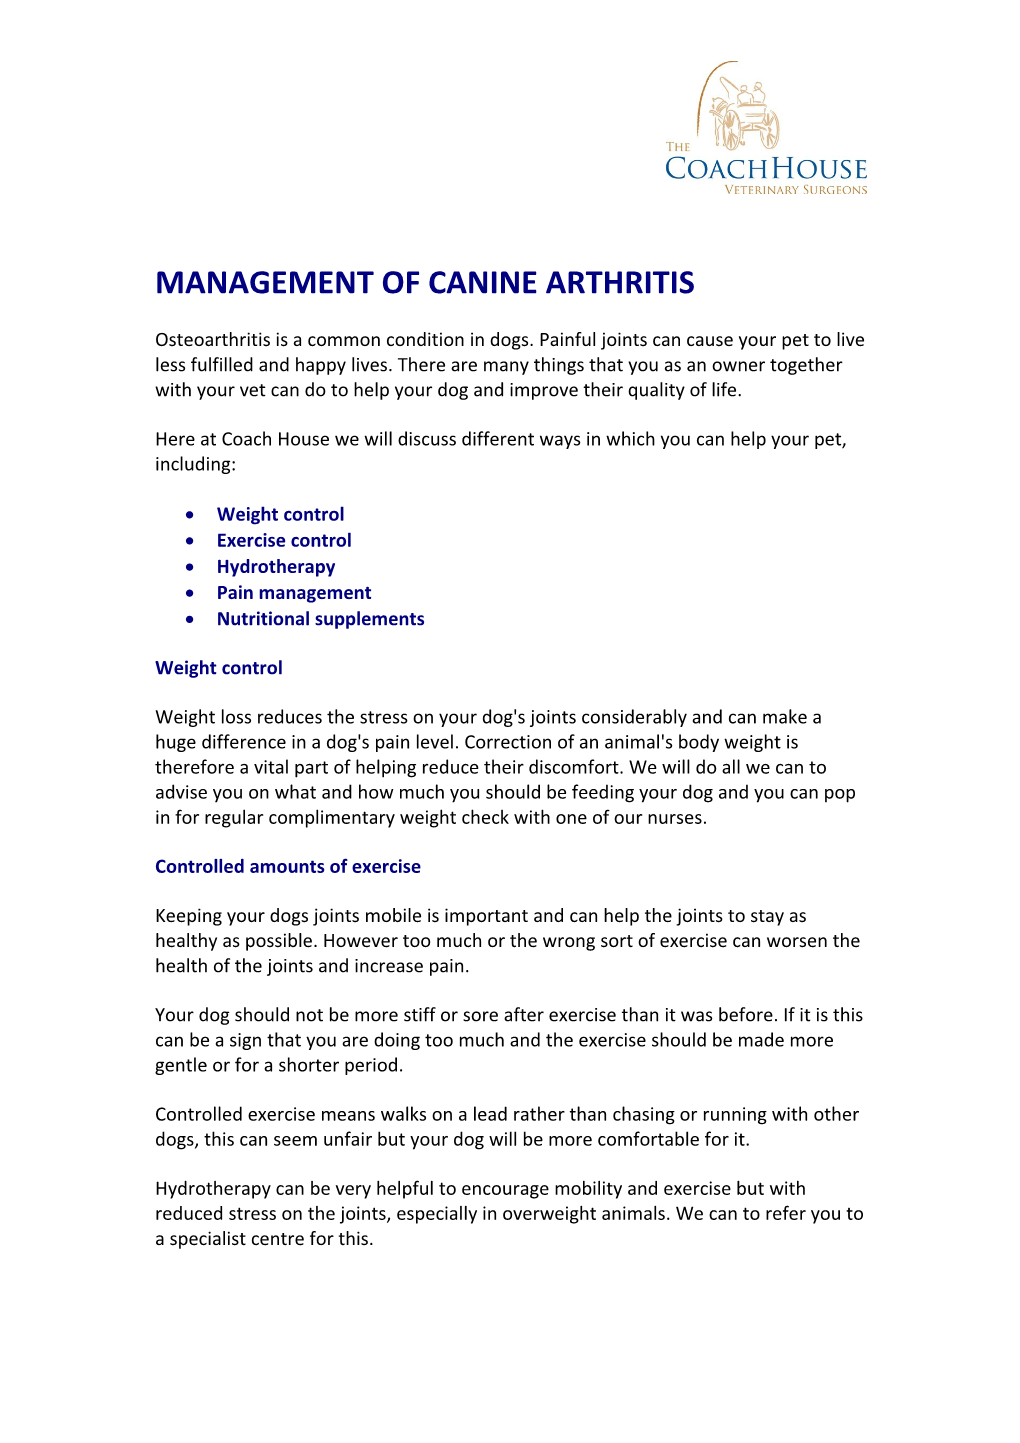 Management of Canine Arthritis